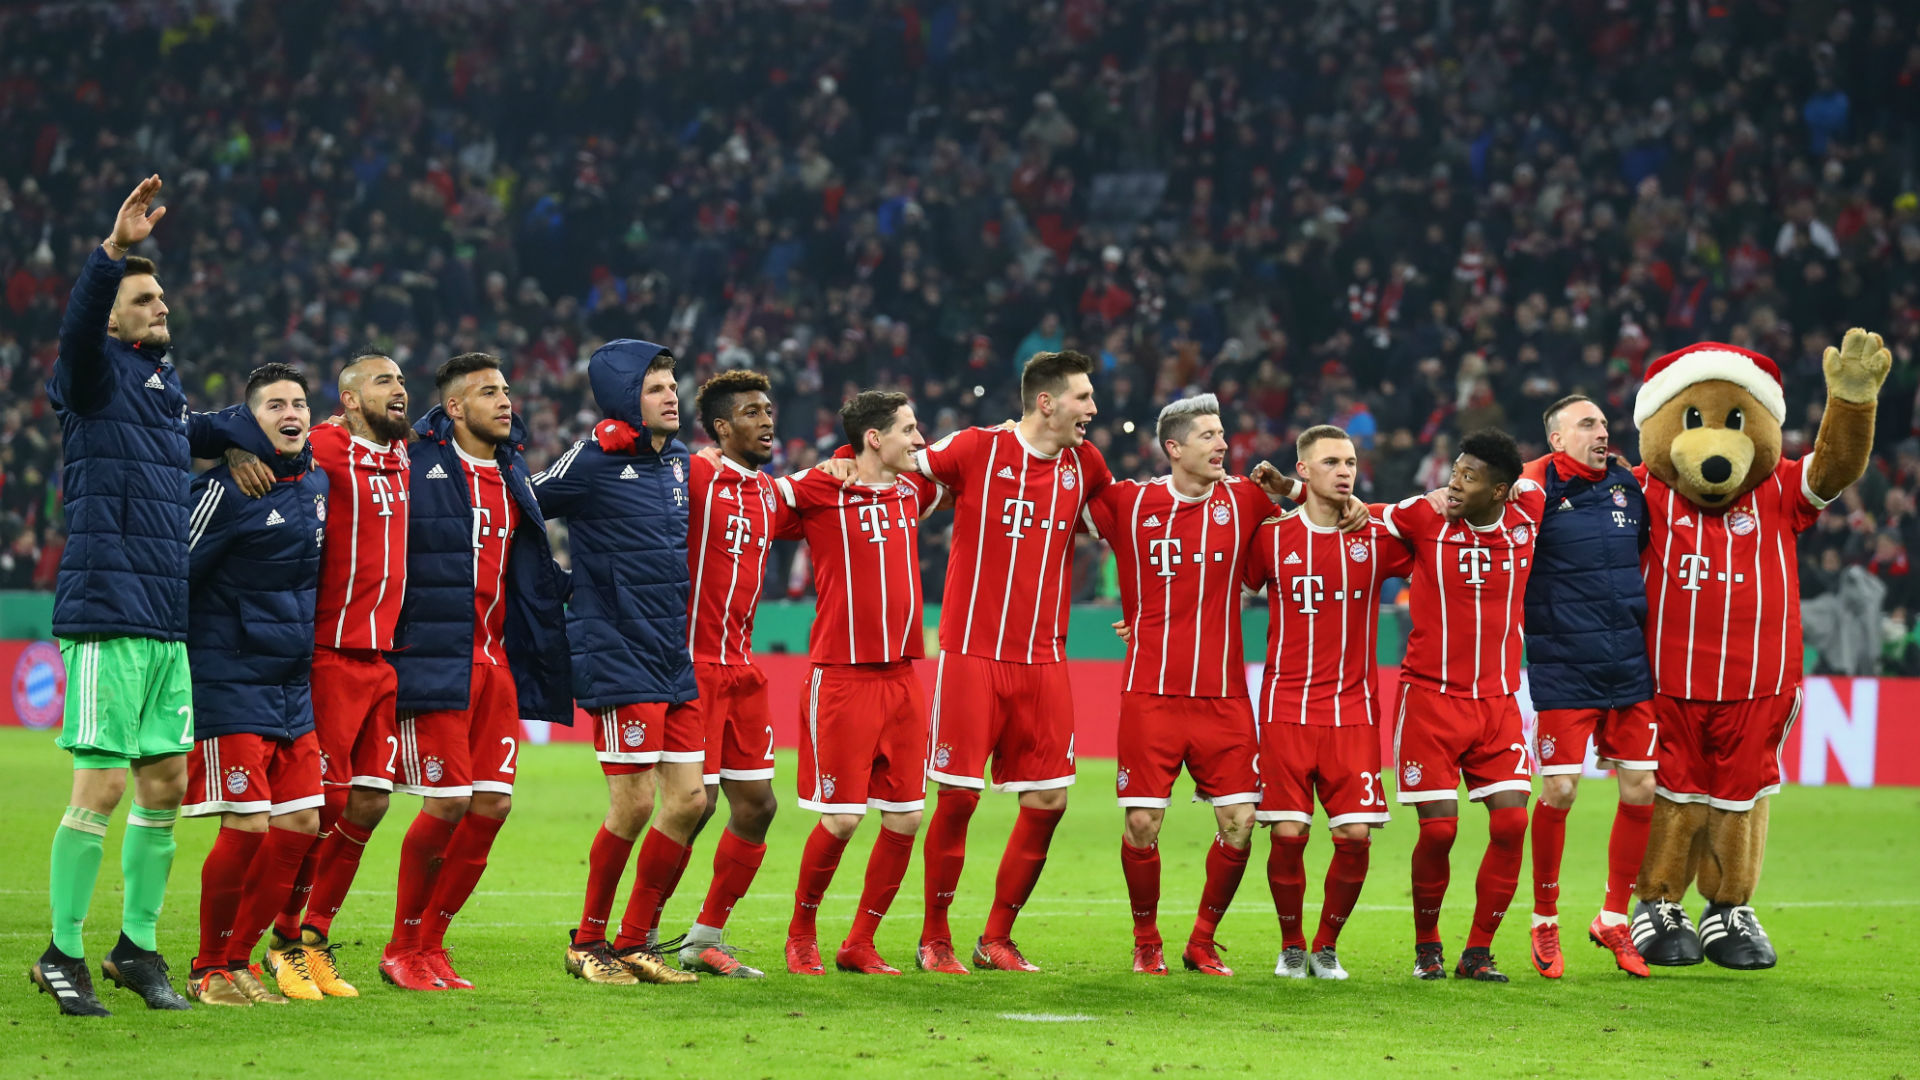 Bayern draw Paderborn in Pokal quarter-finals